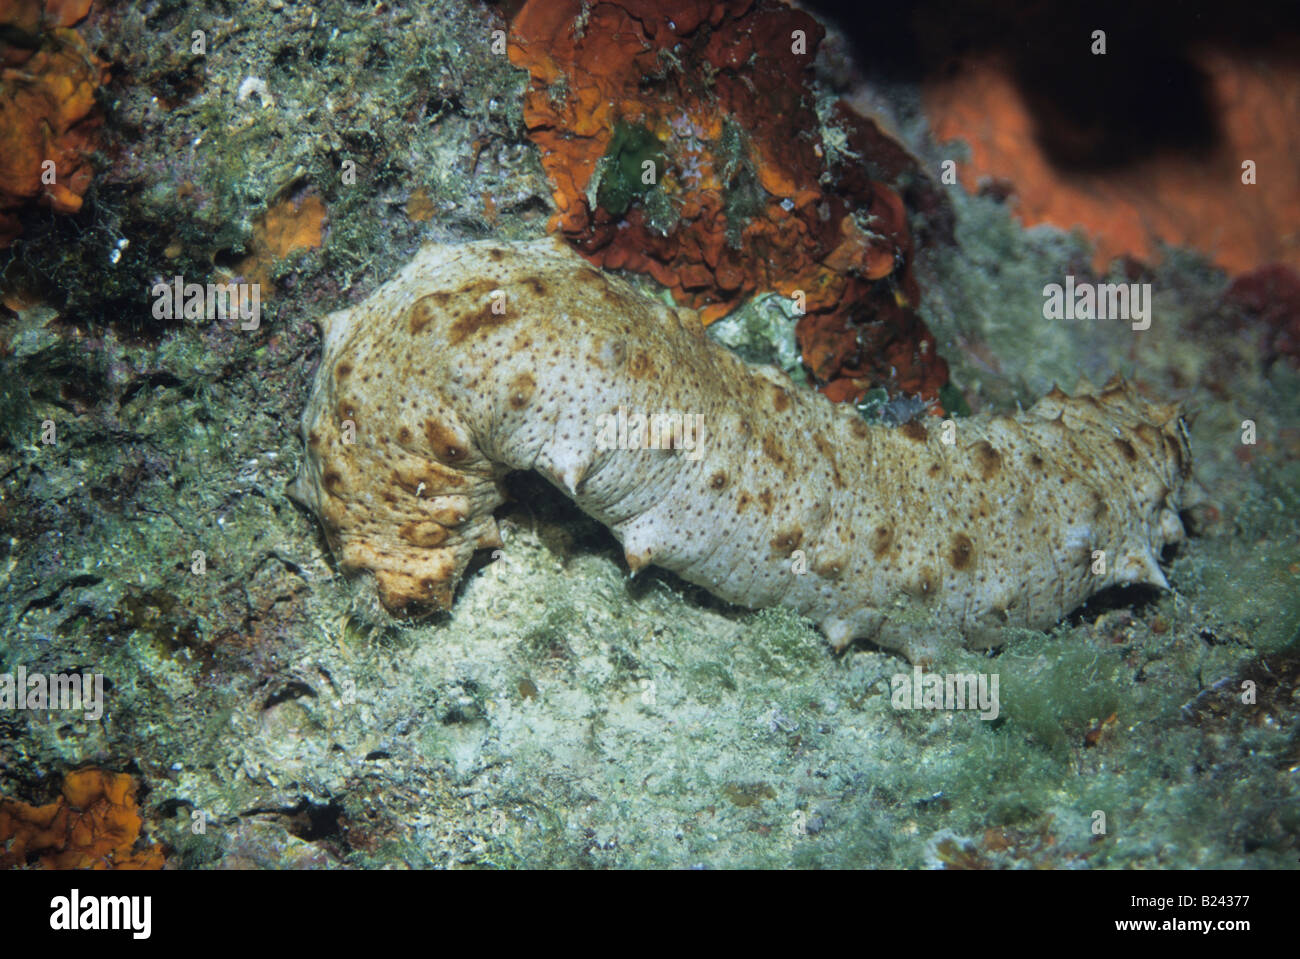 Sea cucumber underwater in Mediterranean sea Stock Photo